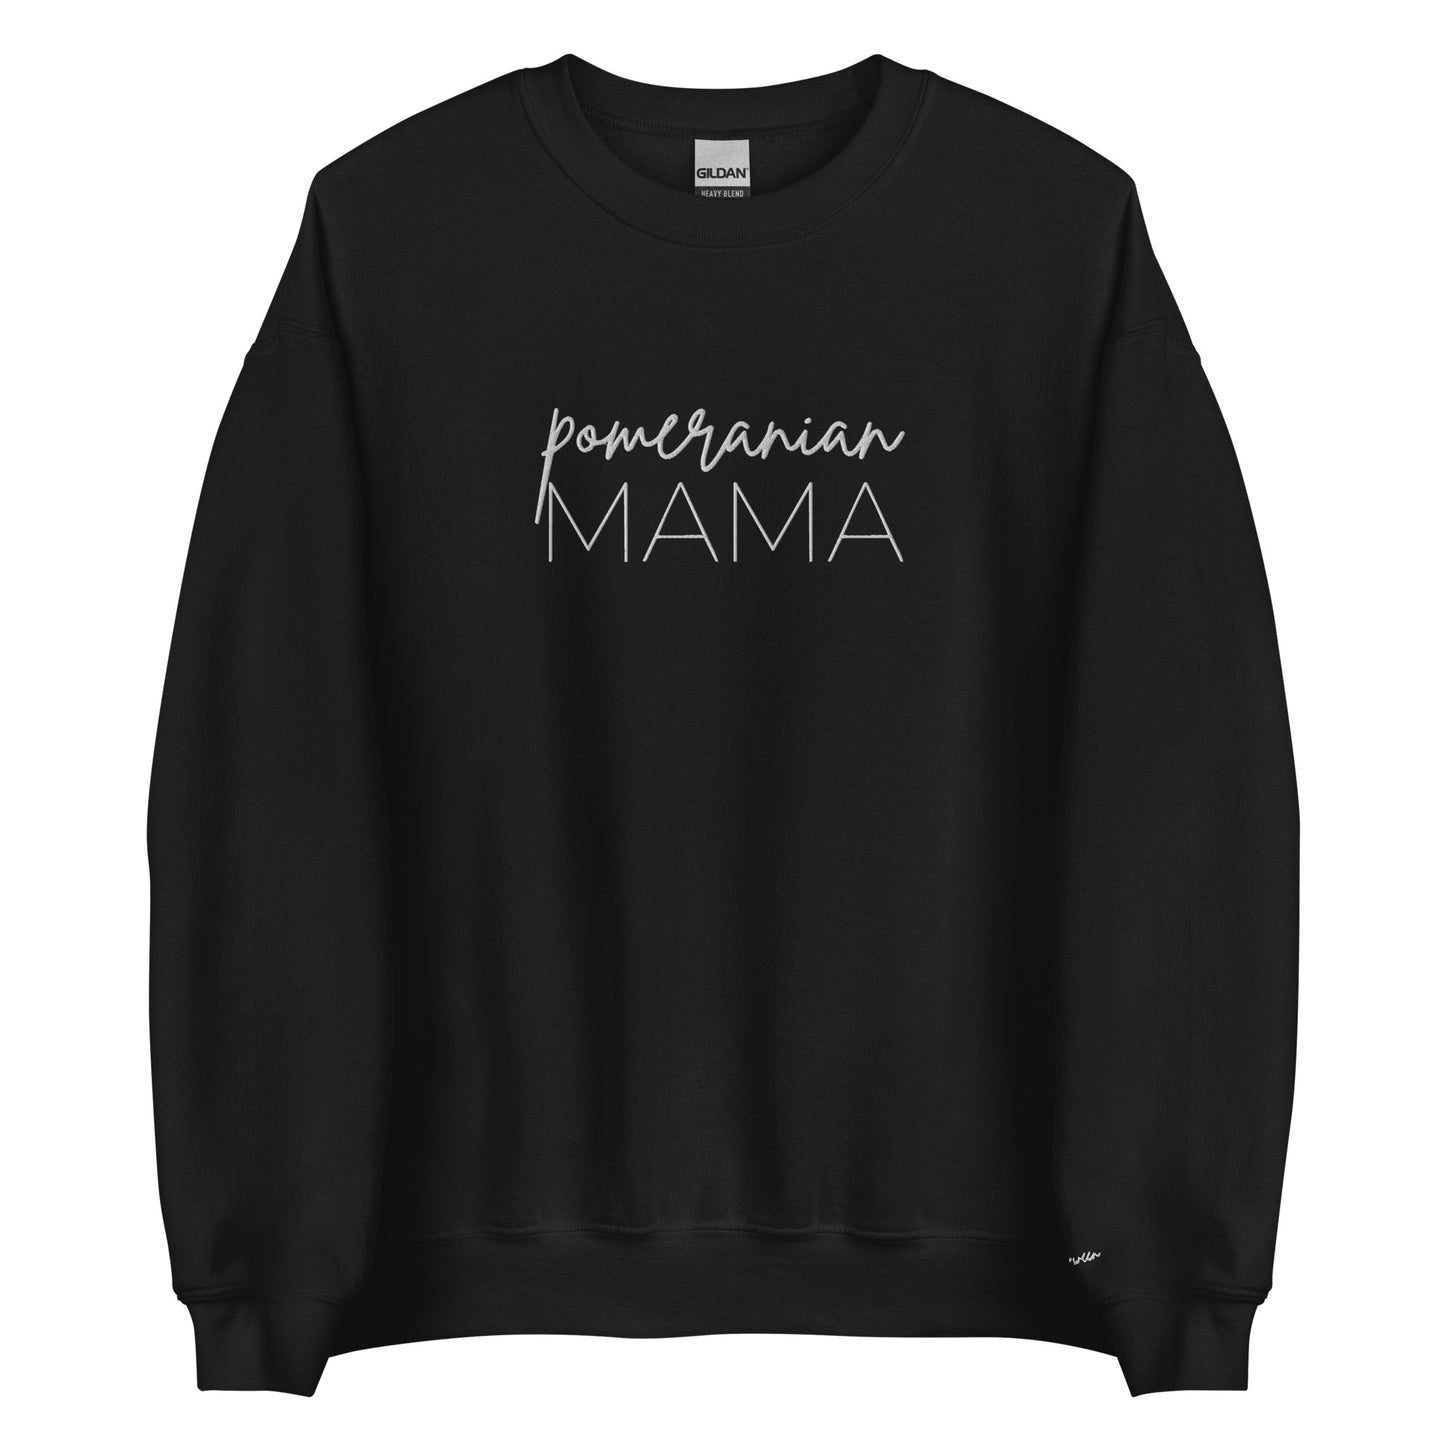 Embroidered Sweatshirt - POMERANIAN MAMA